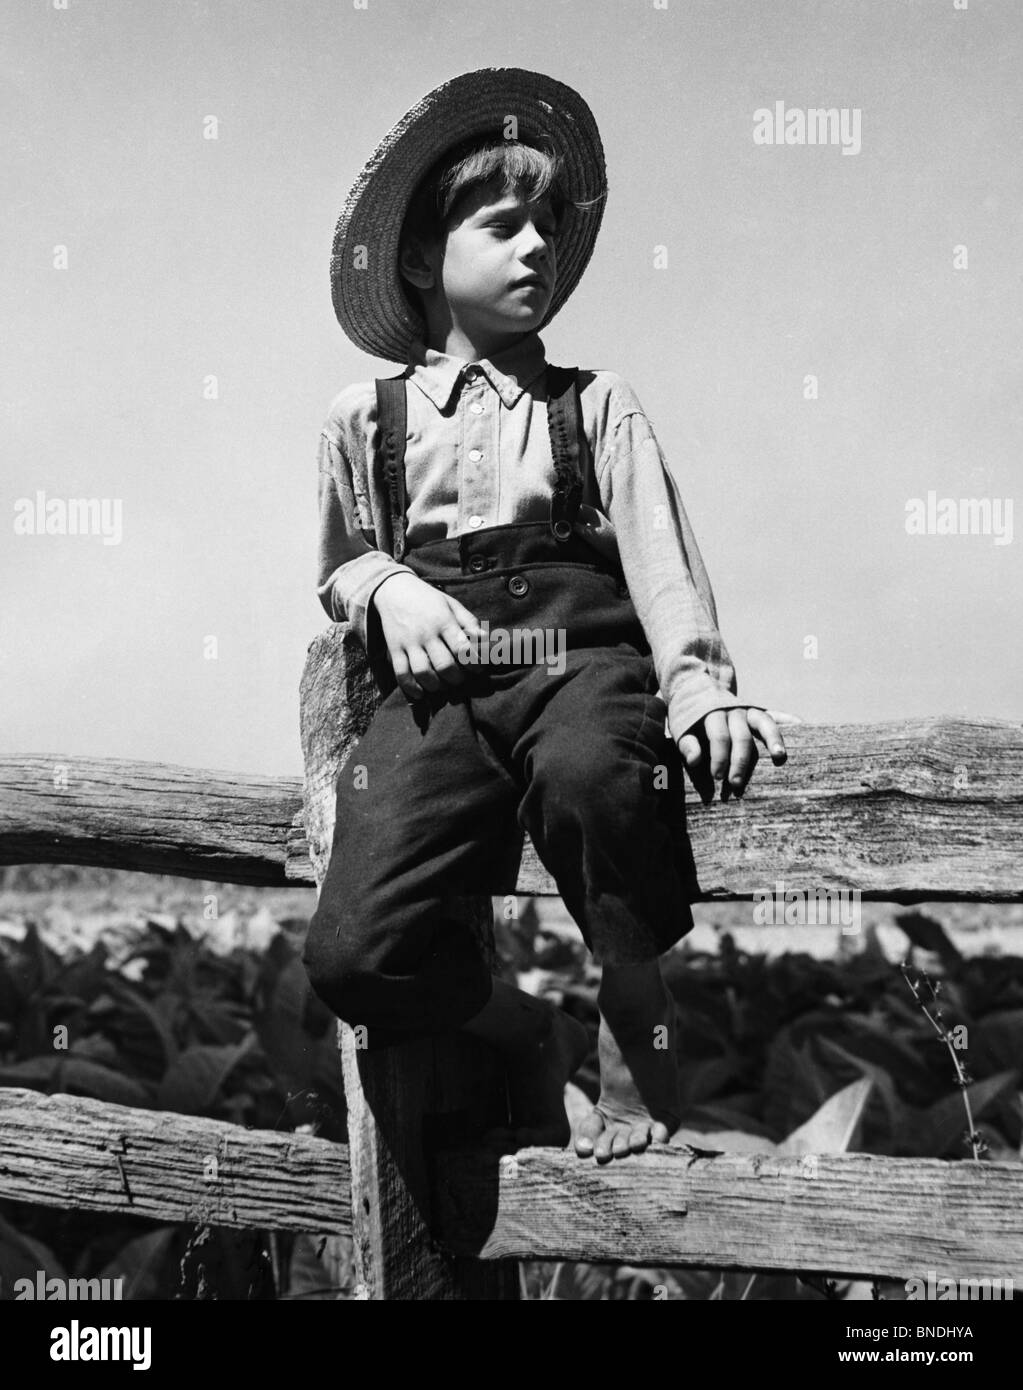 Amish boy Black and White Stock Photos & Images - Alamy